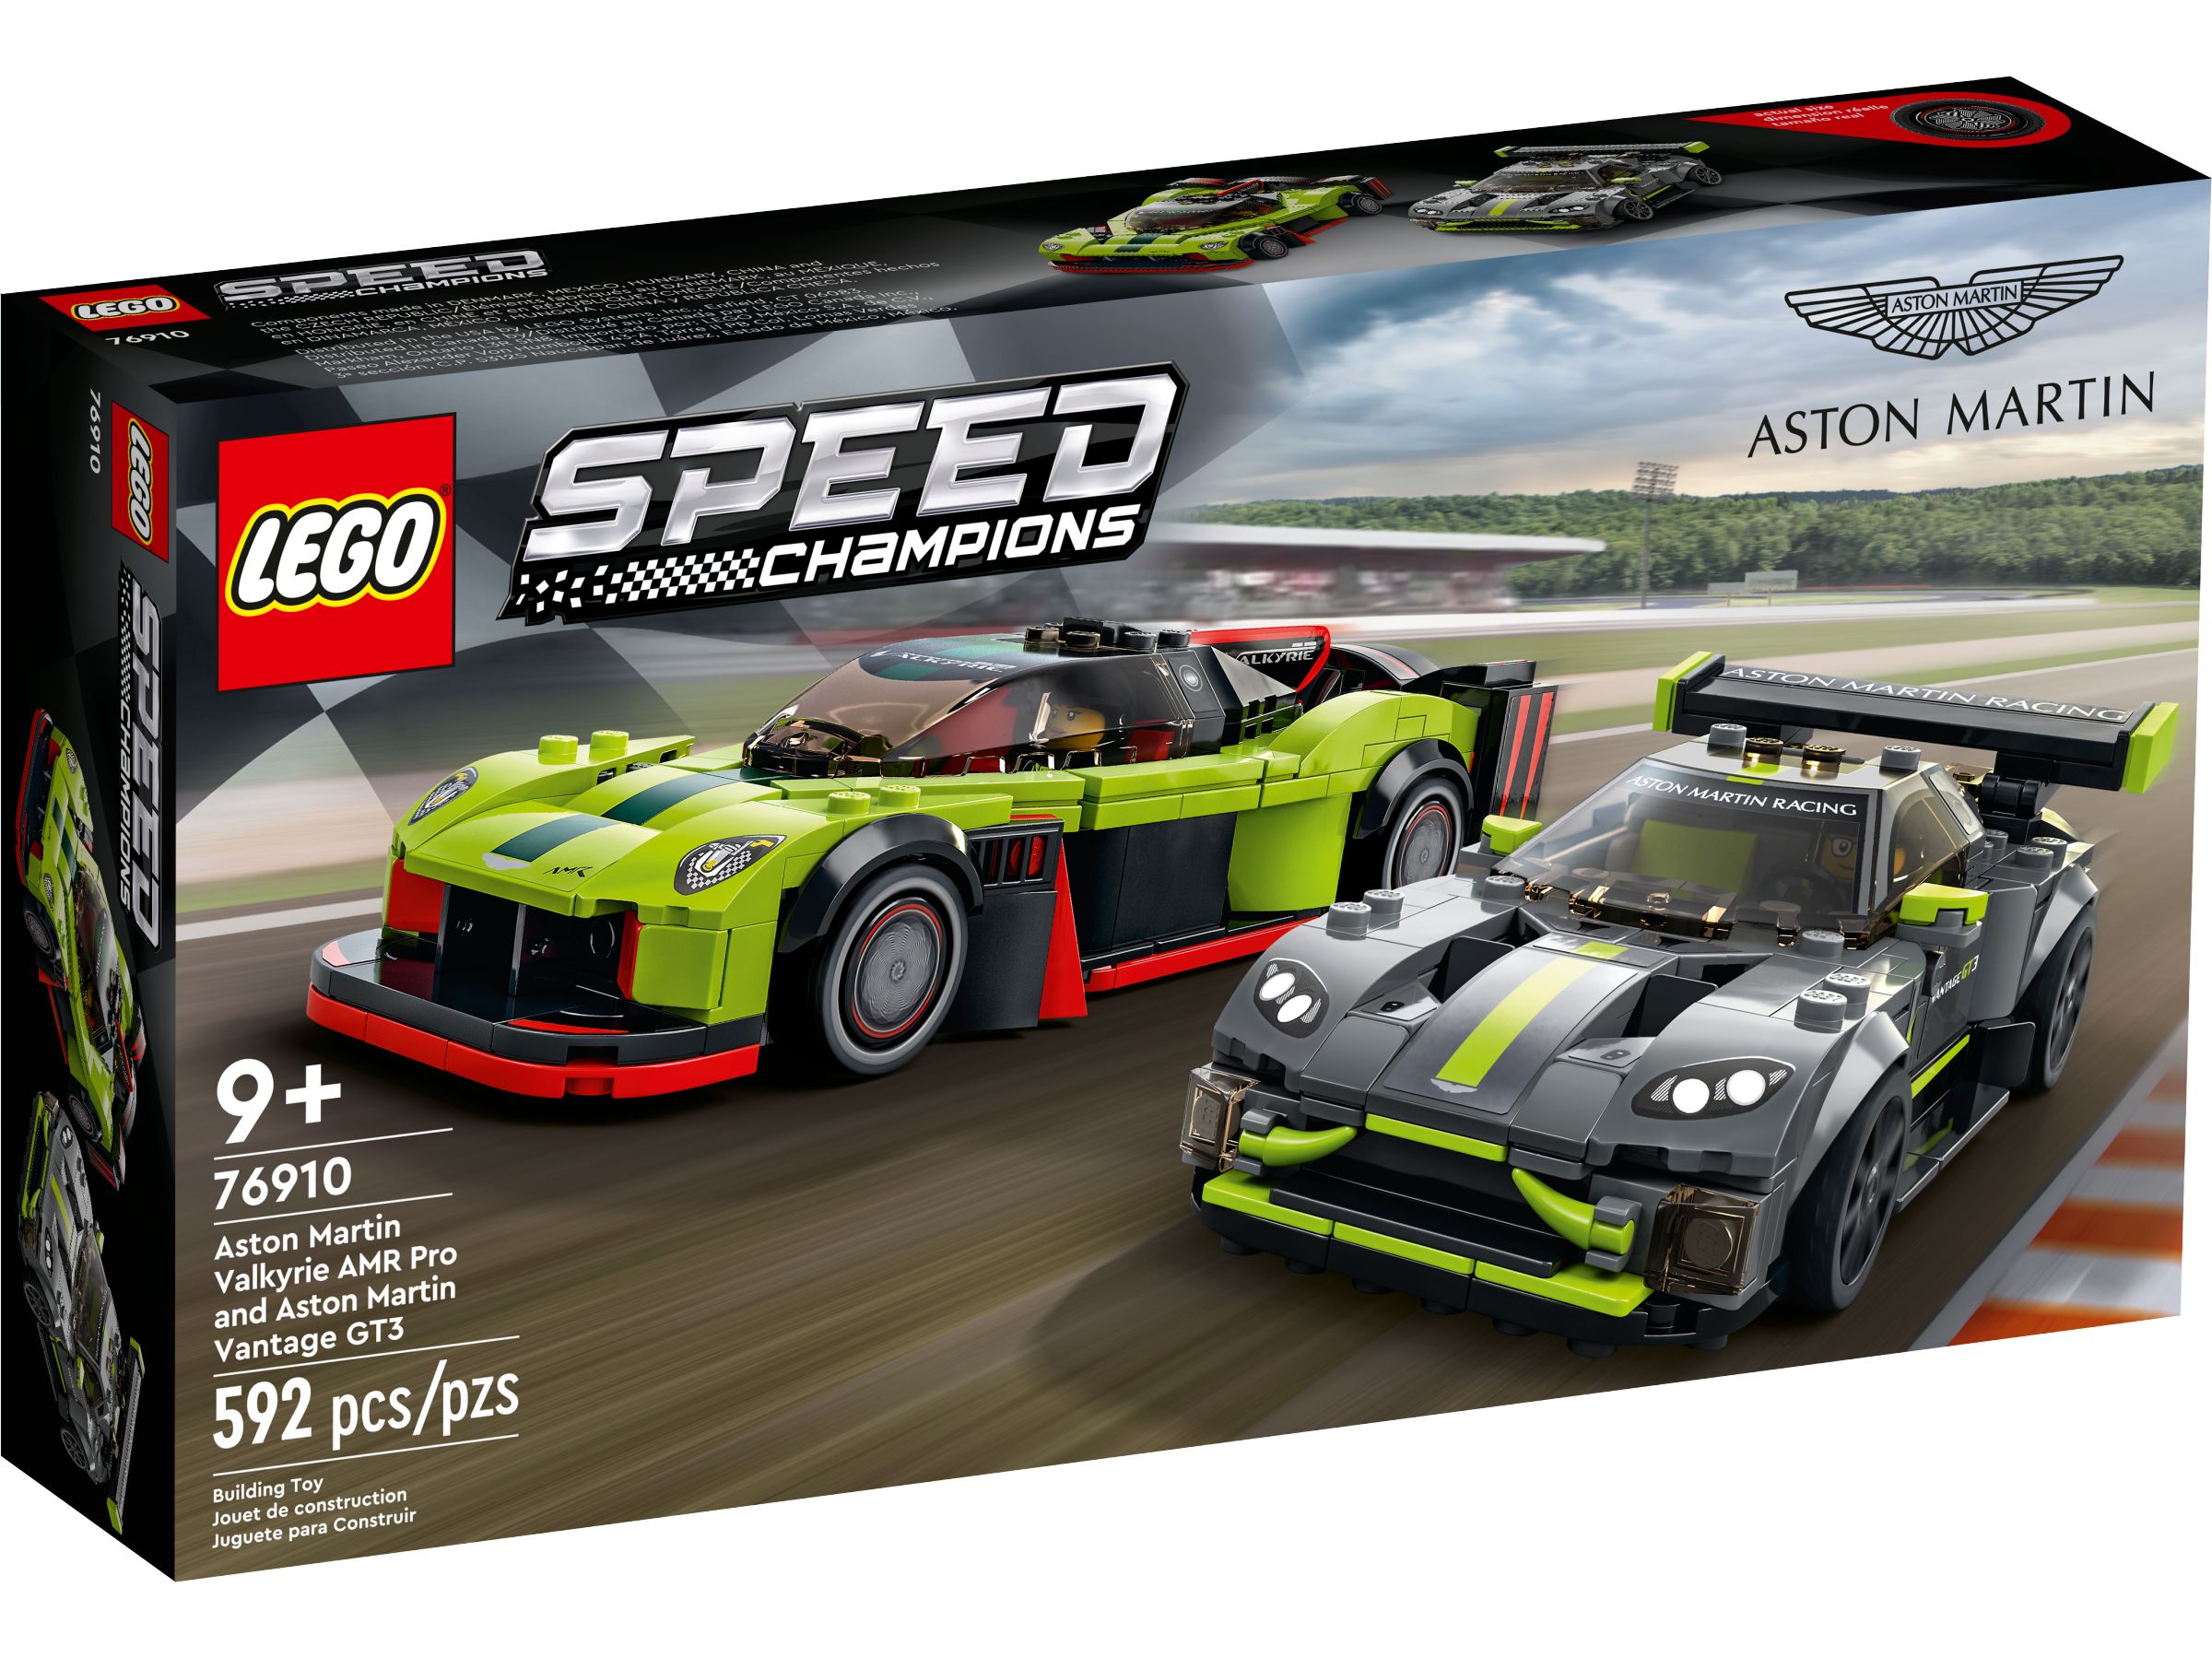 LEGO Speed Champions 76910 Aston Martin Valkyrie AMR Pro & Aston Martin Vantage GT3 LEGO_76910_alt1.jpg